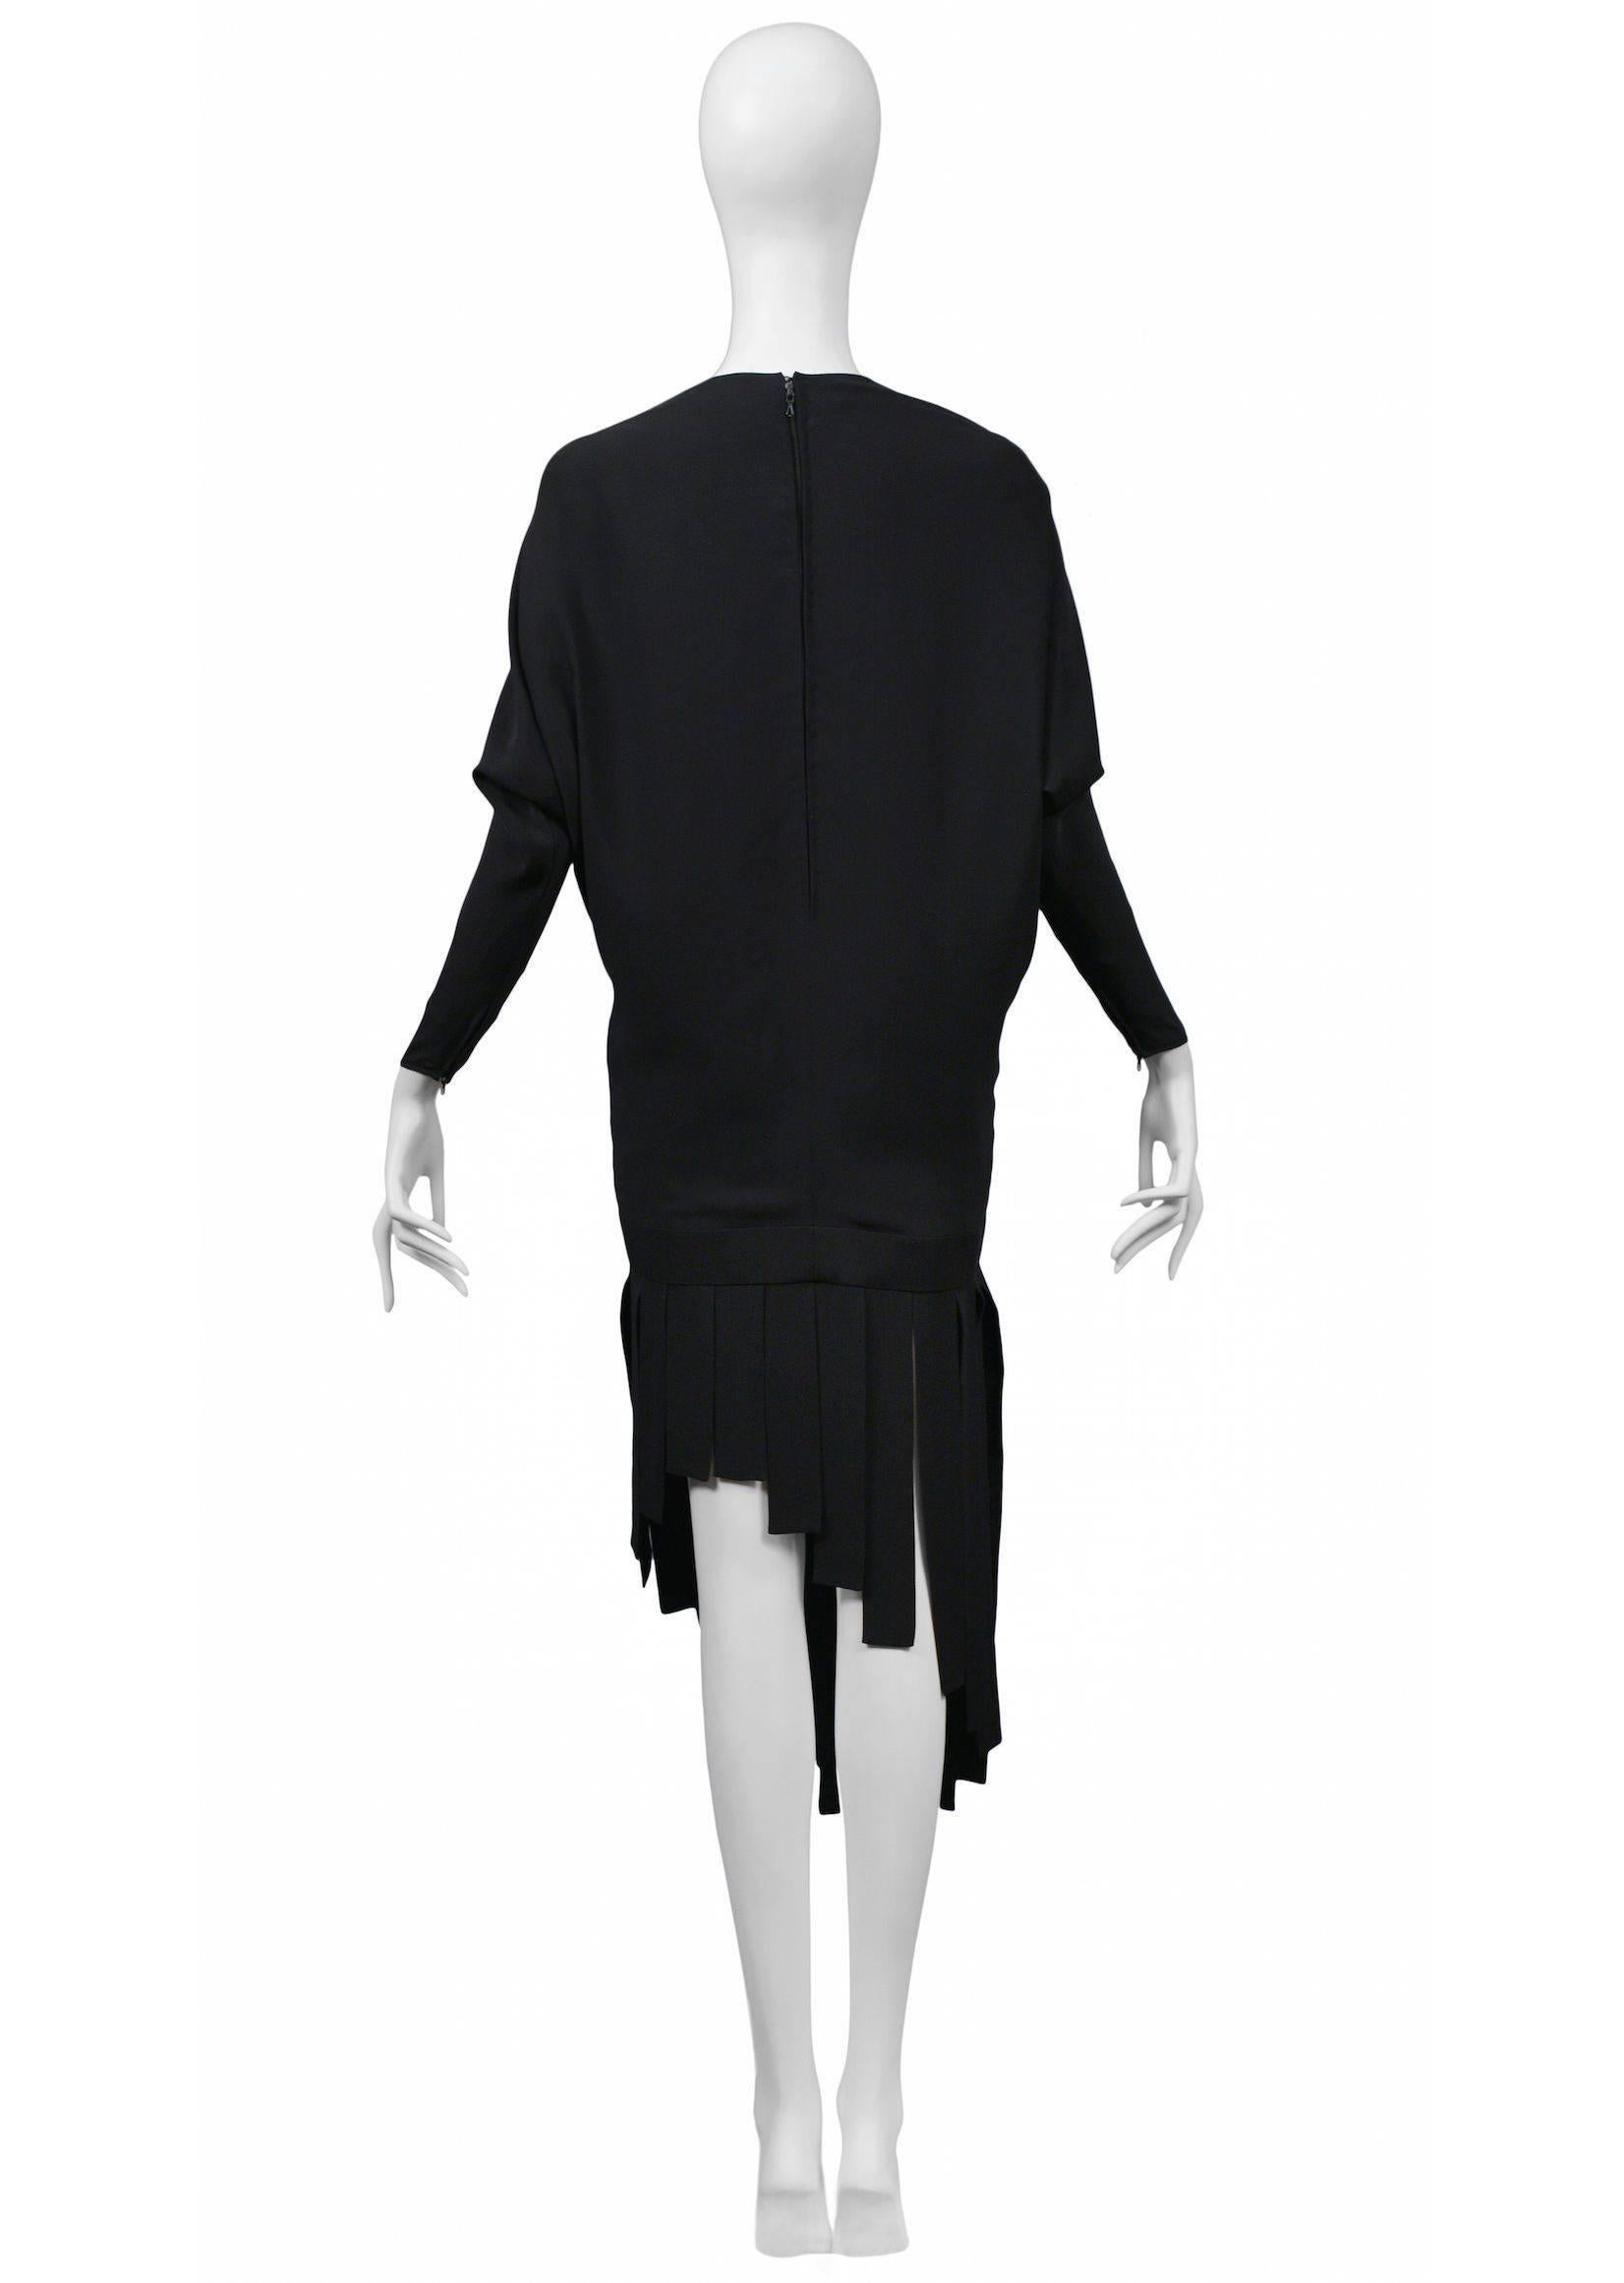 Pierre Cardin Couture Black Carwash Dress 1